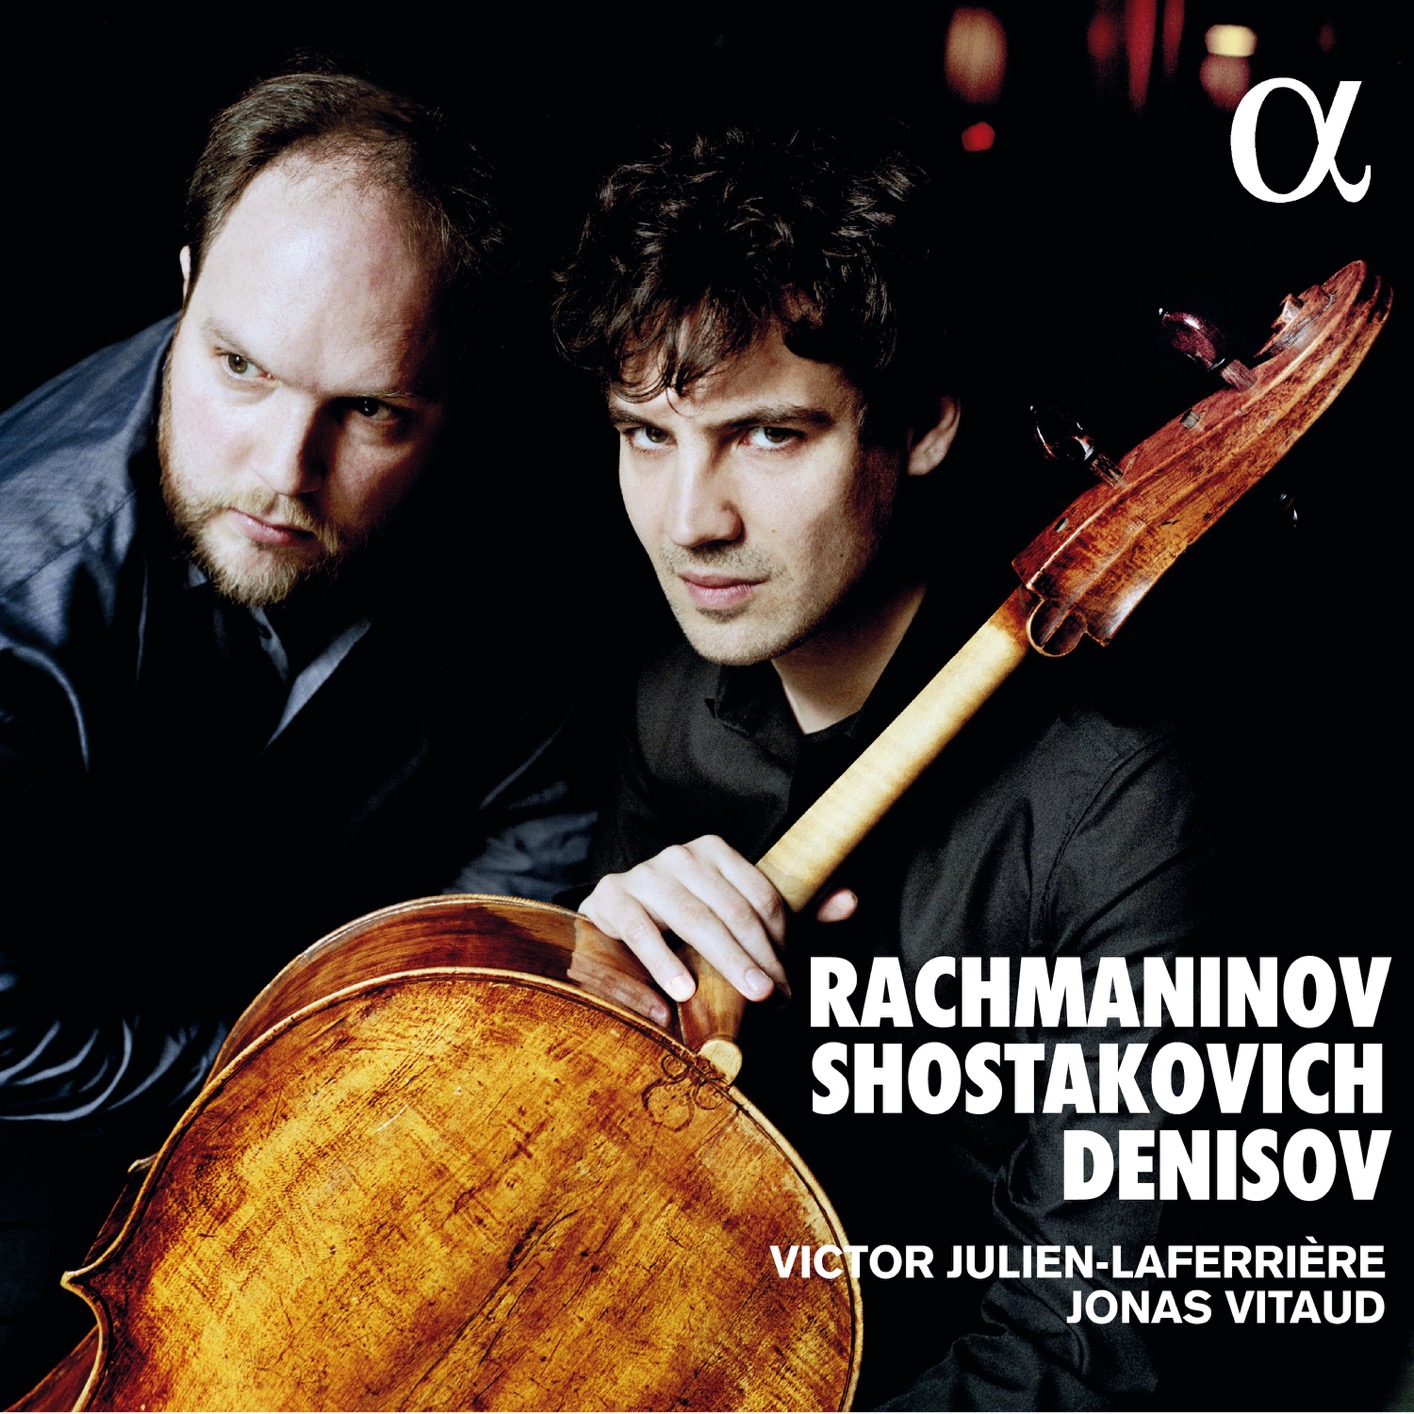 Victor Julien-Laferriere & Jonas Vitaud – Rachmaninov, Shostakovich & Denisov (2019) [FLAC 24bit/192kHz]